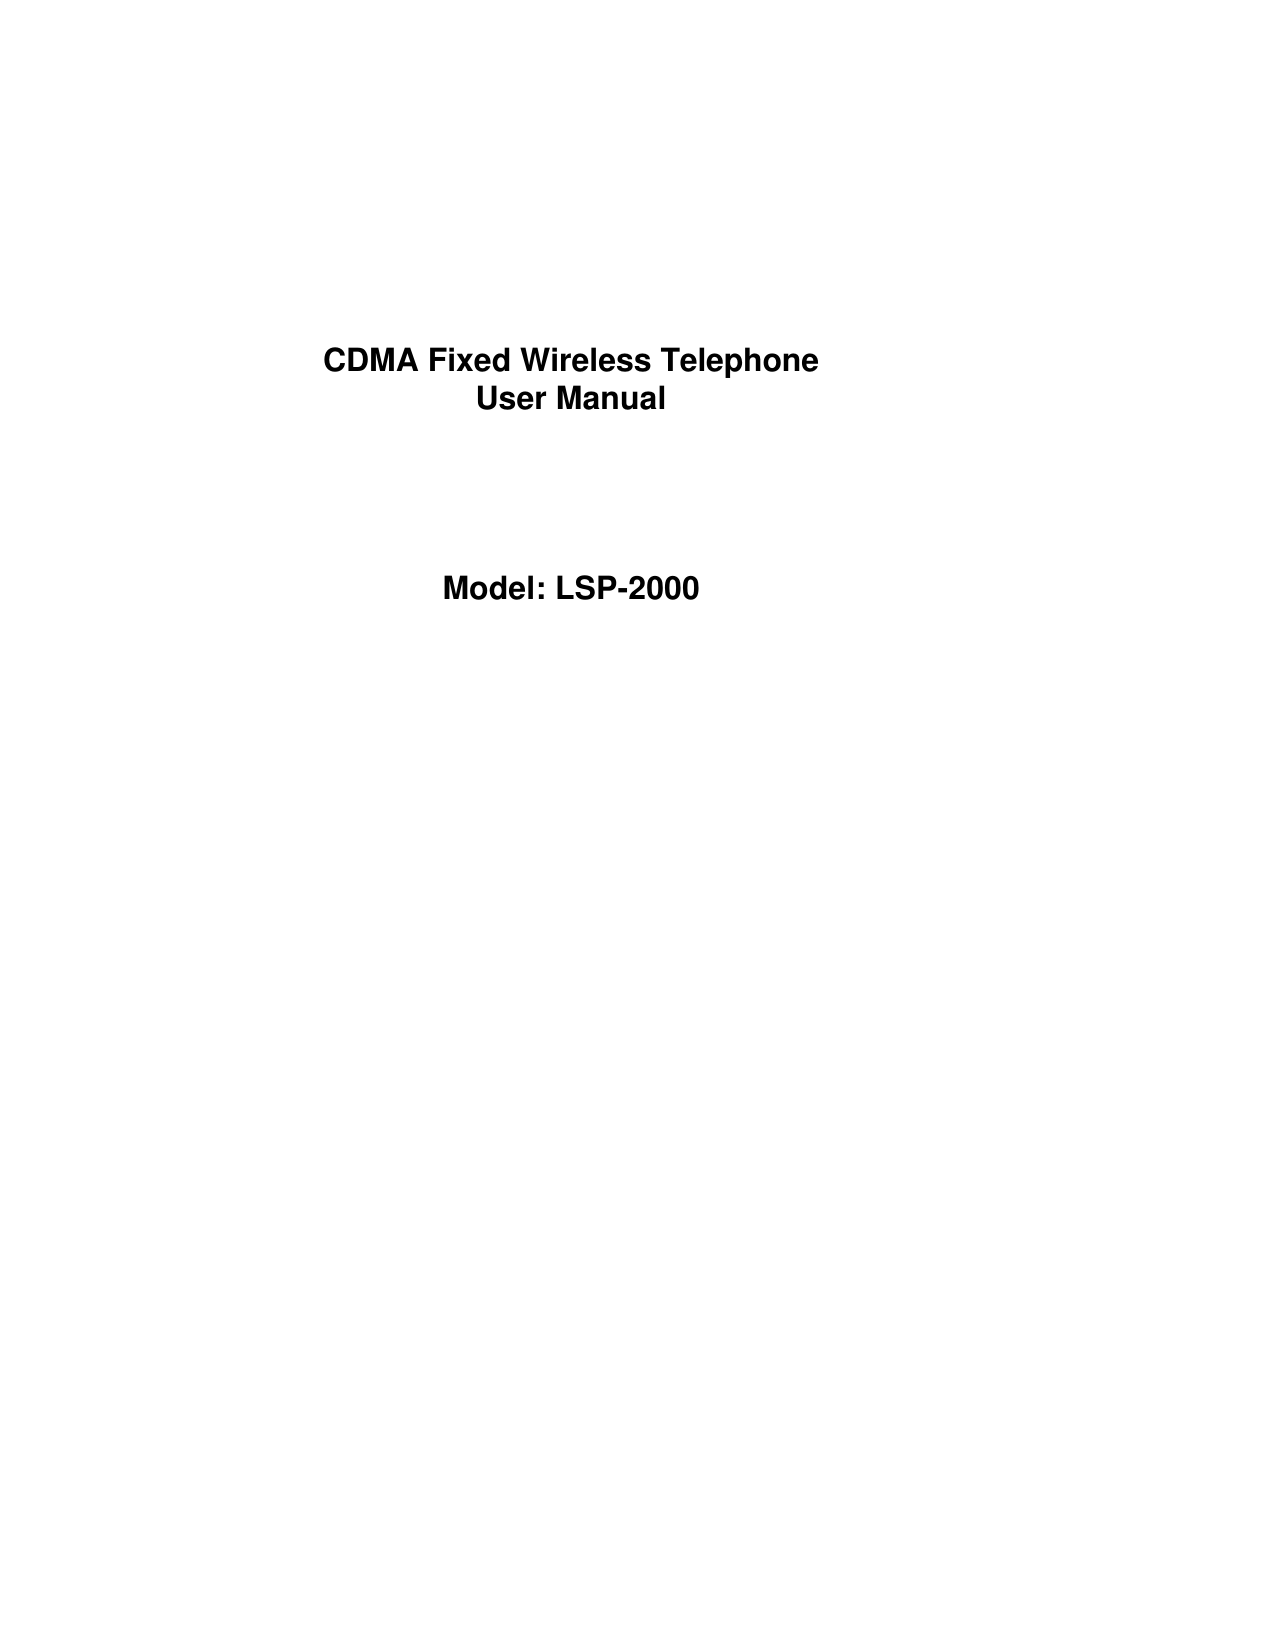 CDMA Fixed Wireless Telephone User Manual     Model: LSP-2000 